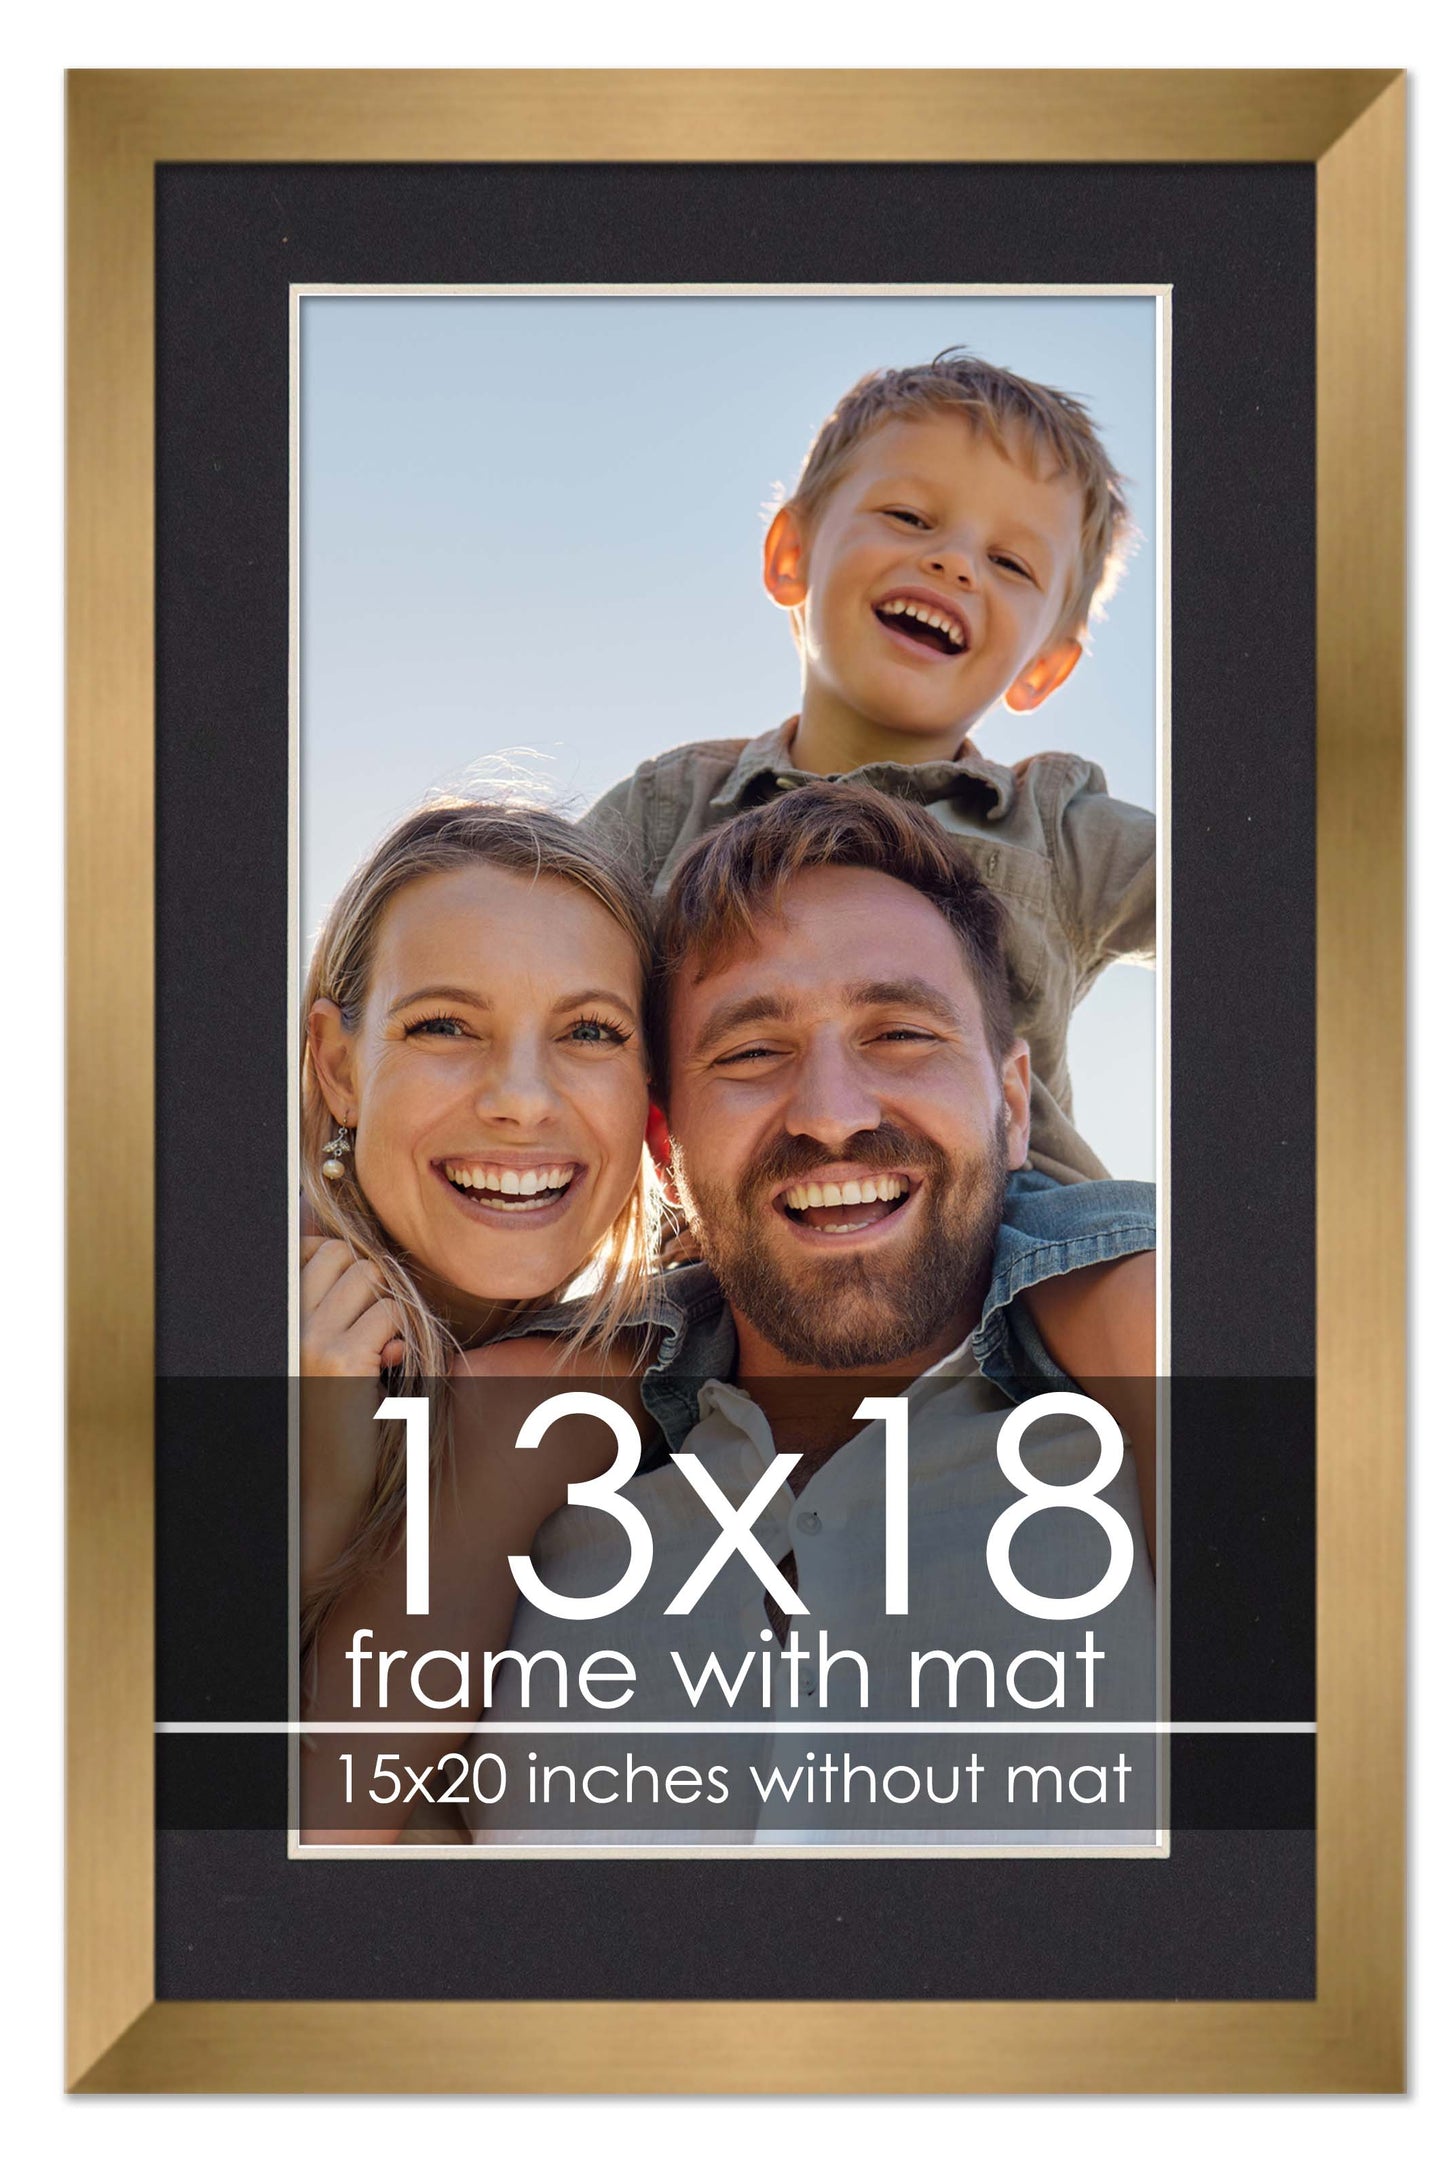 Bronze Frame with Black Mat